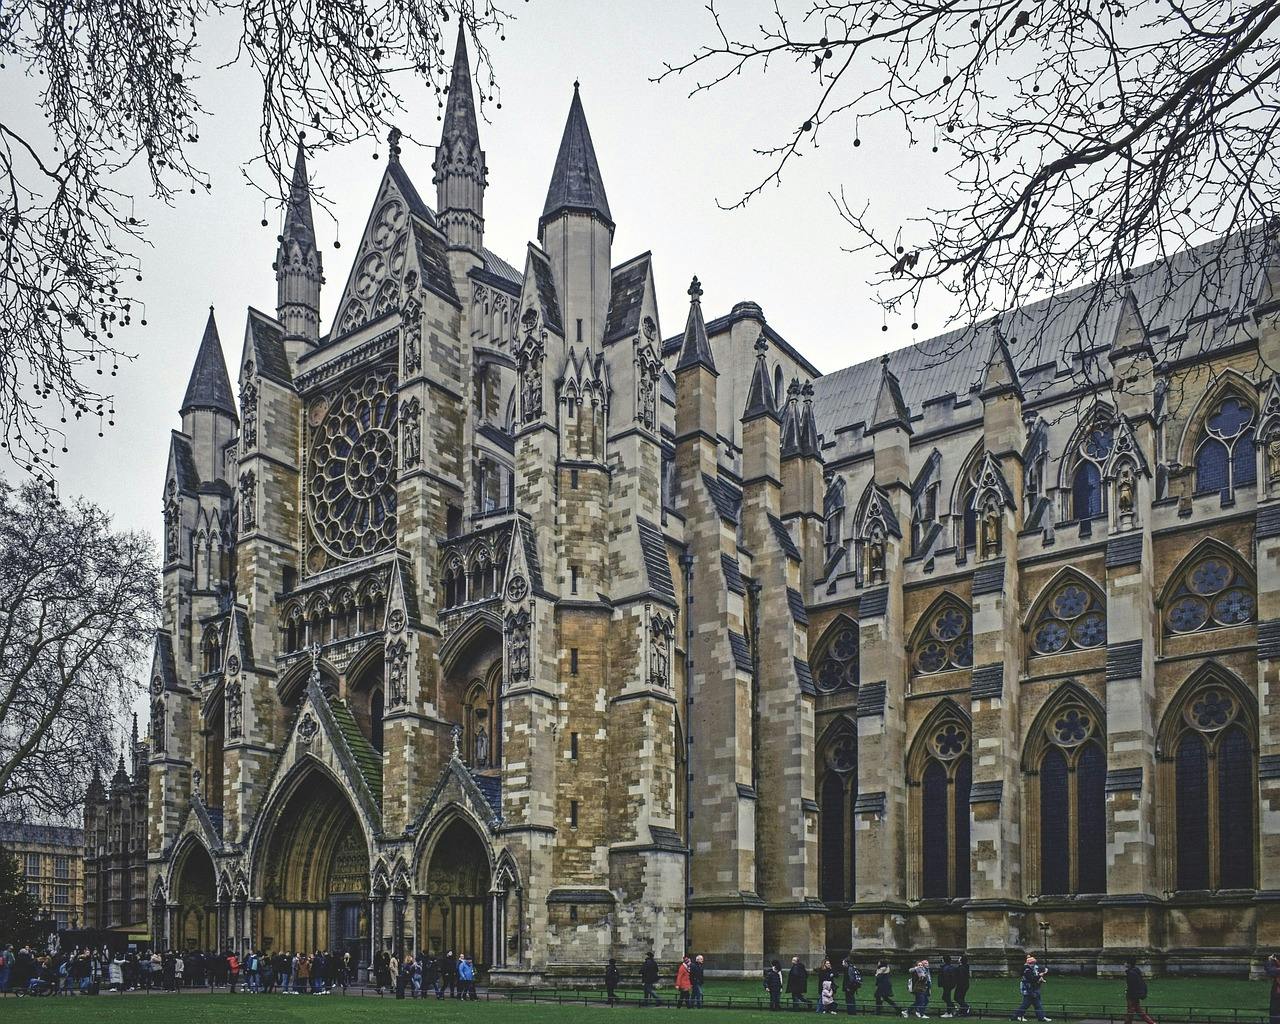 Visite guidée à pied de l'abbaye de Westminster et de Westminster